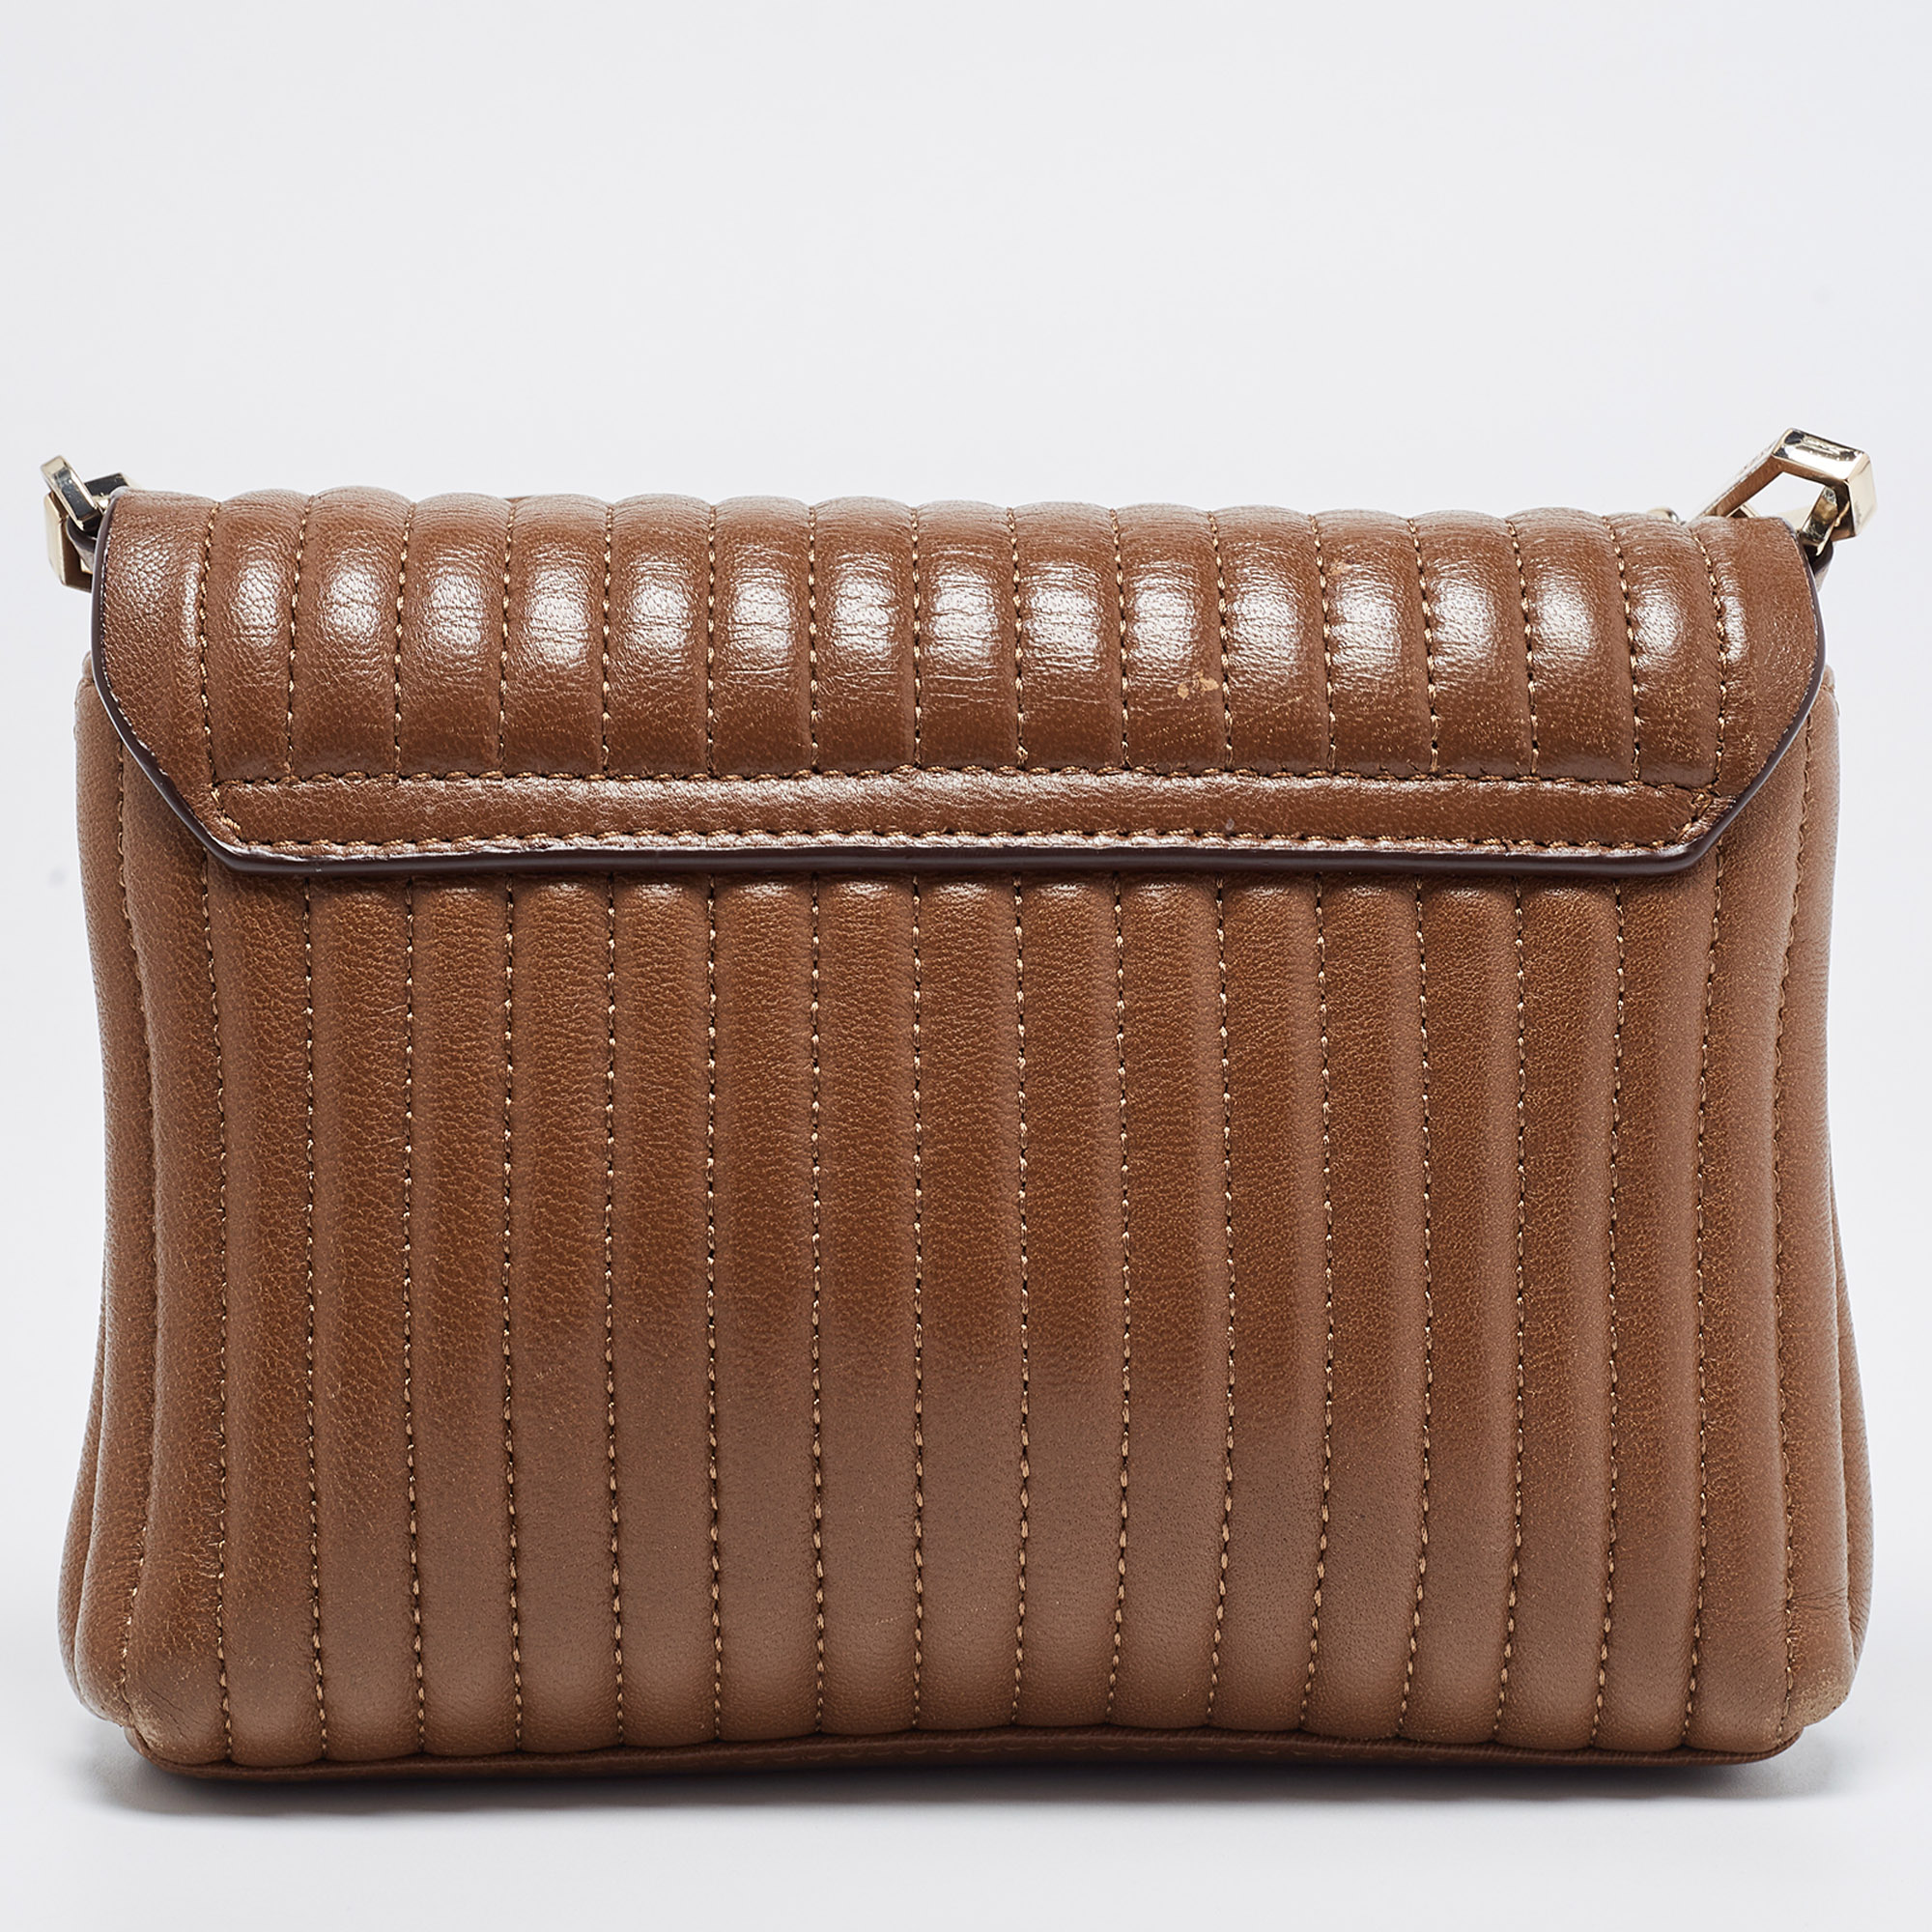 DKNY Brown Pinstripe Quilted Leather Gansevoort Flap Shoulder Bag